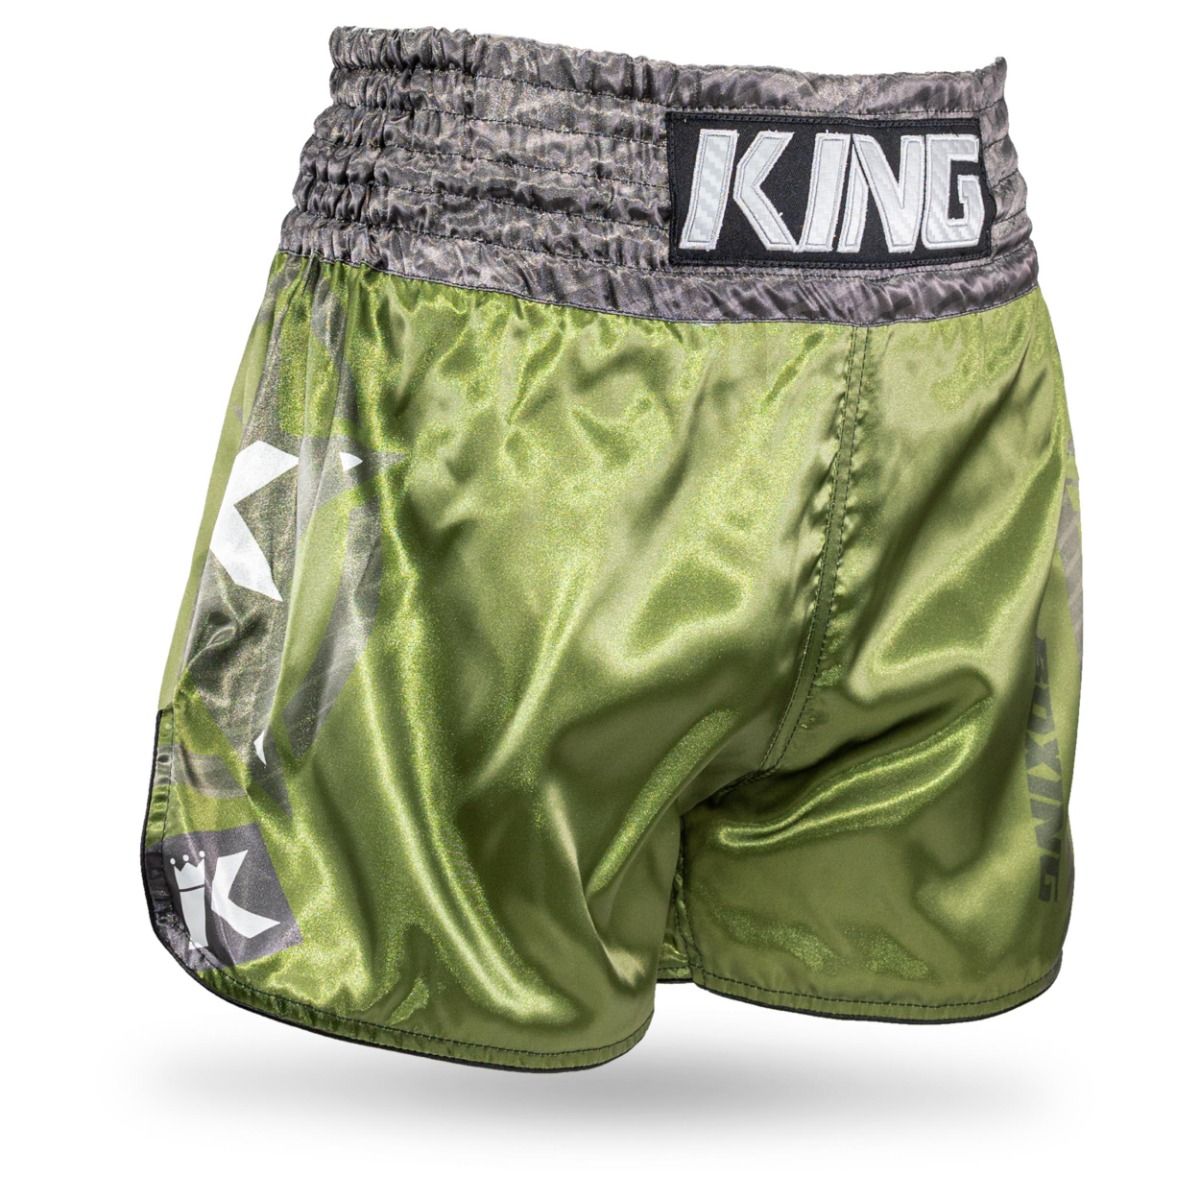 King Pro Boxing - Fightshort - LEGION  1 - Groen - Green 